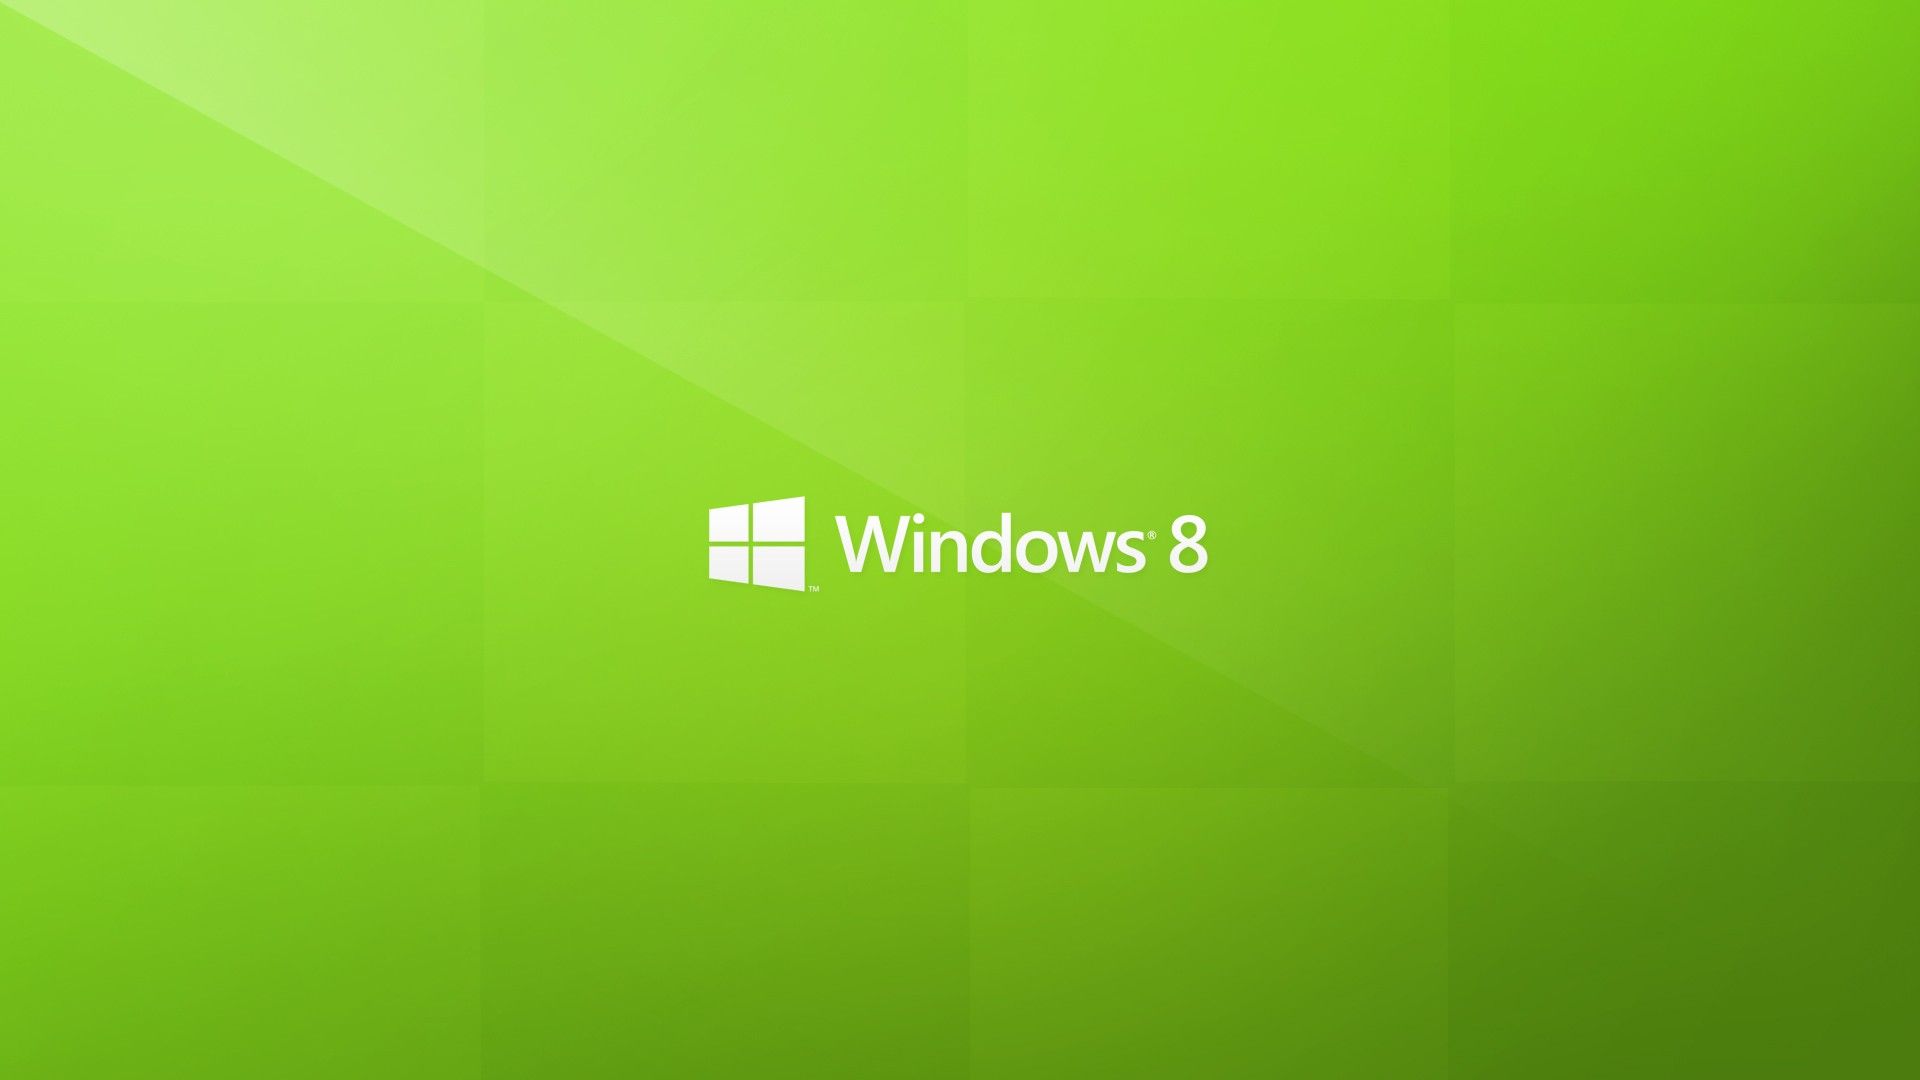 HD-Green-Windows-8-Wallpaper.jpg